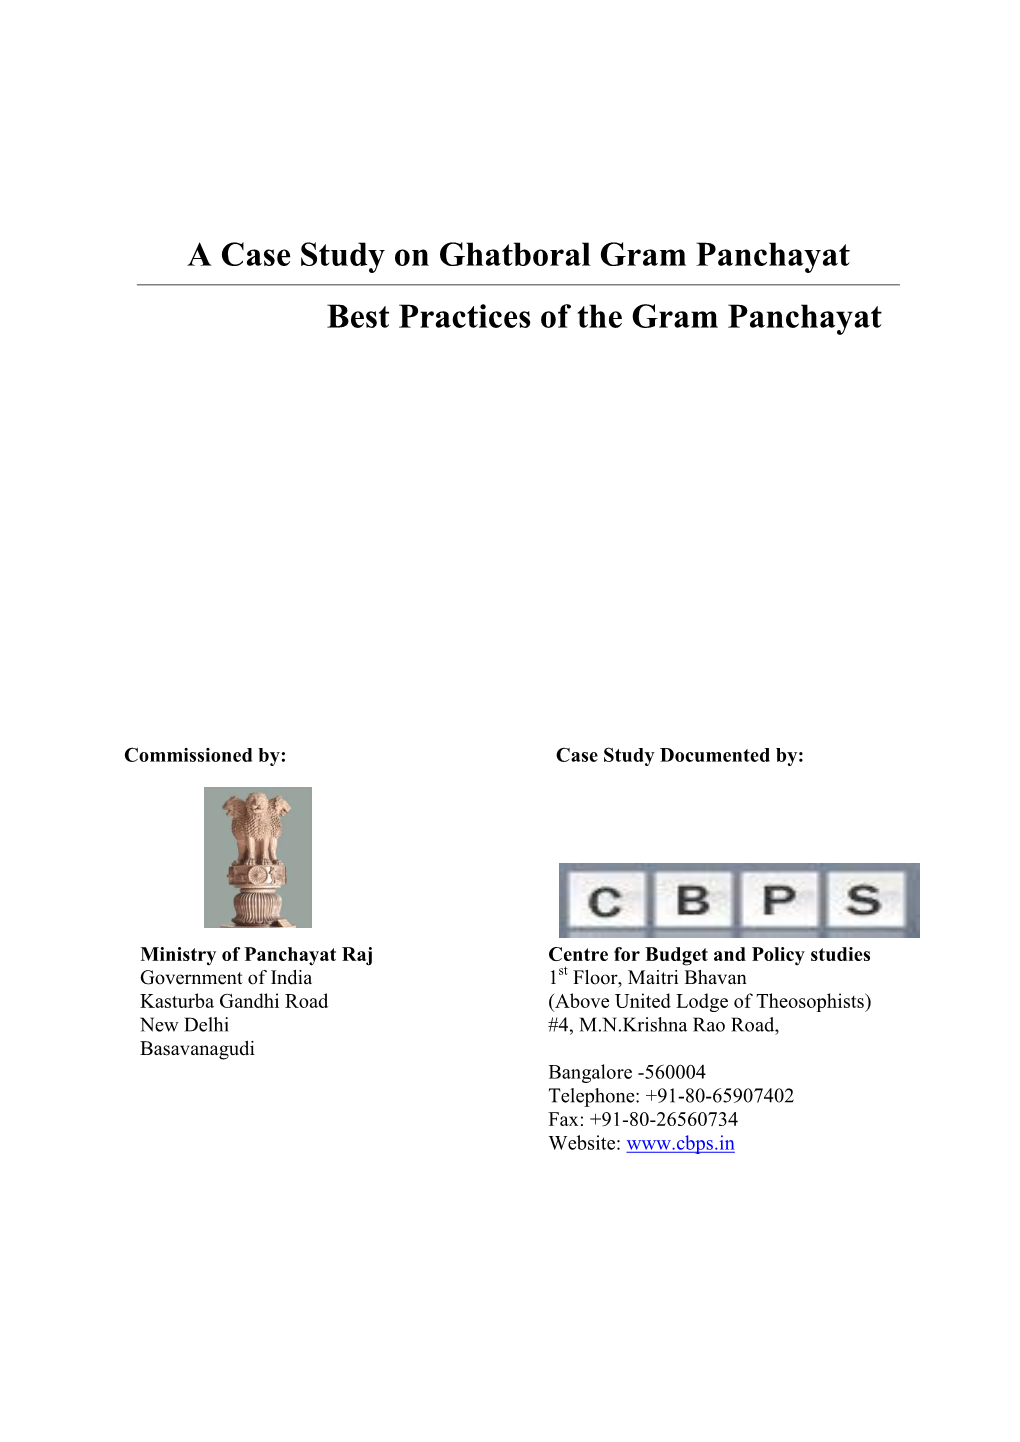 A Case Study on Ghatboral Gram Panchayat Best Practices of the Gram Panchayat